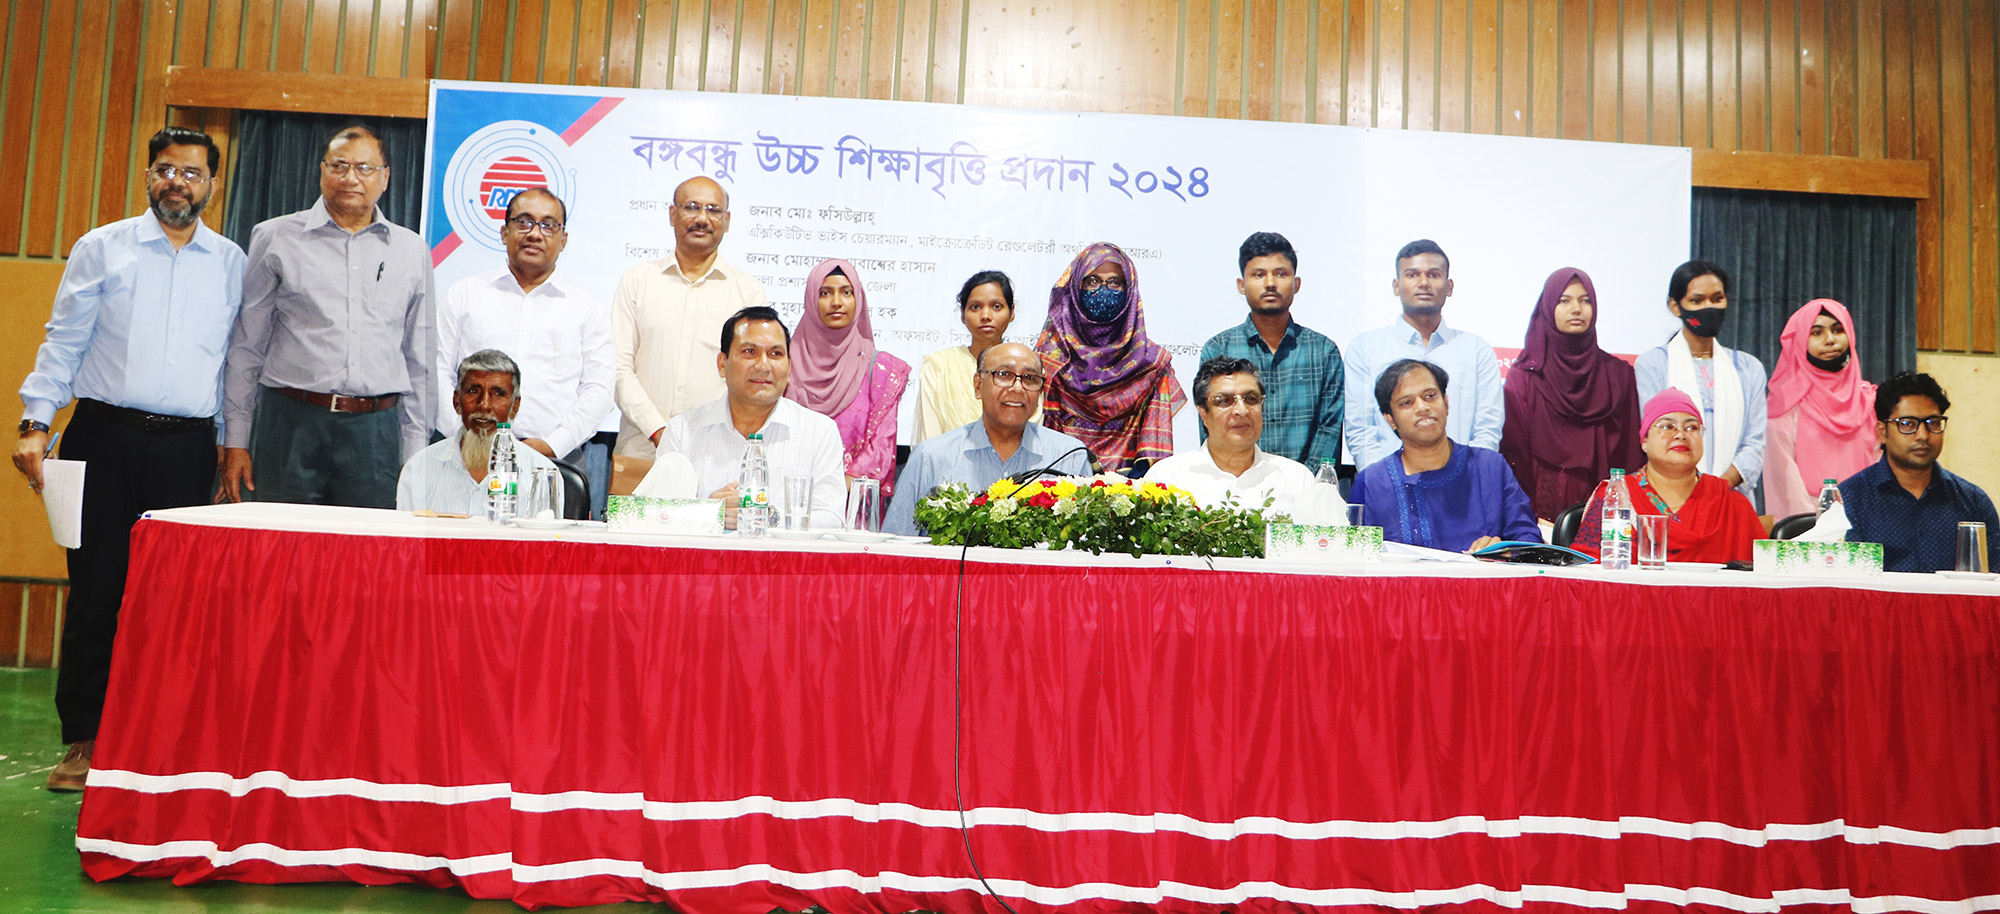 RDRS Bangladesh distributes Bangabandhu higher education scholarships to empower deserving students in Rangpur